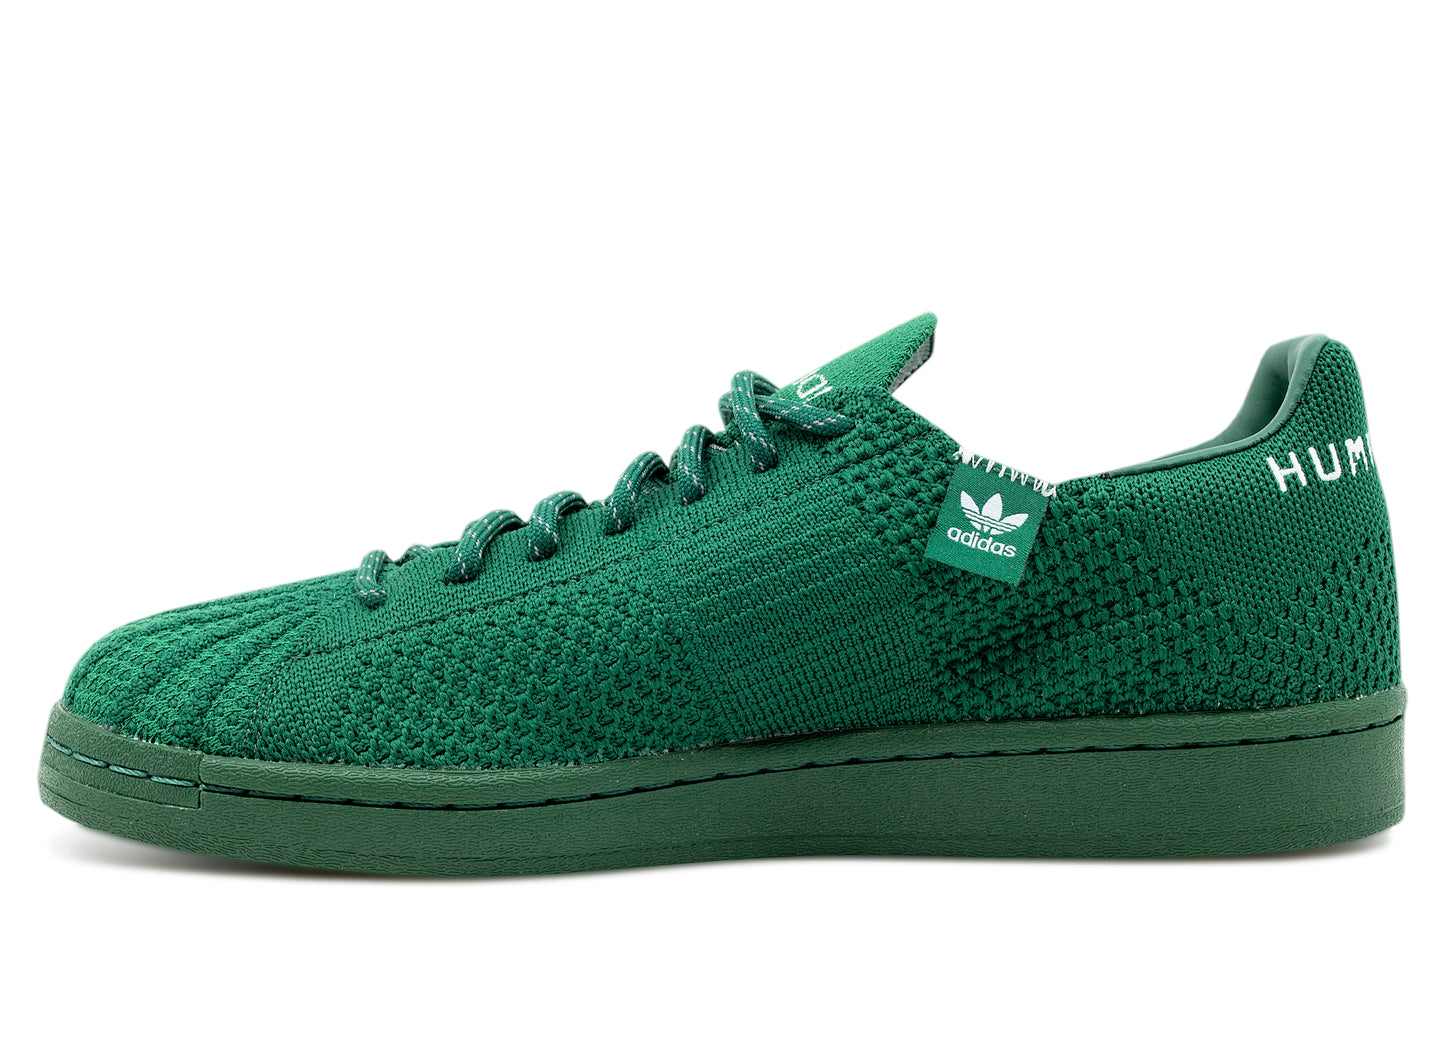 Adidas x Pharrell Williams Superstar PK 'Dark Green'